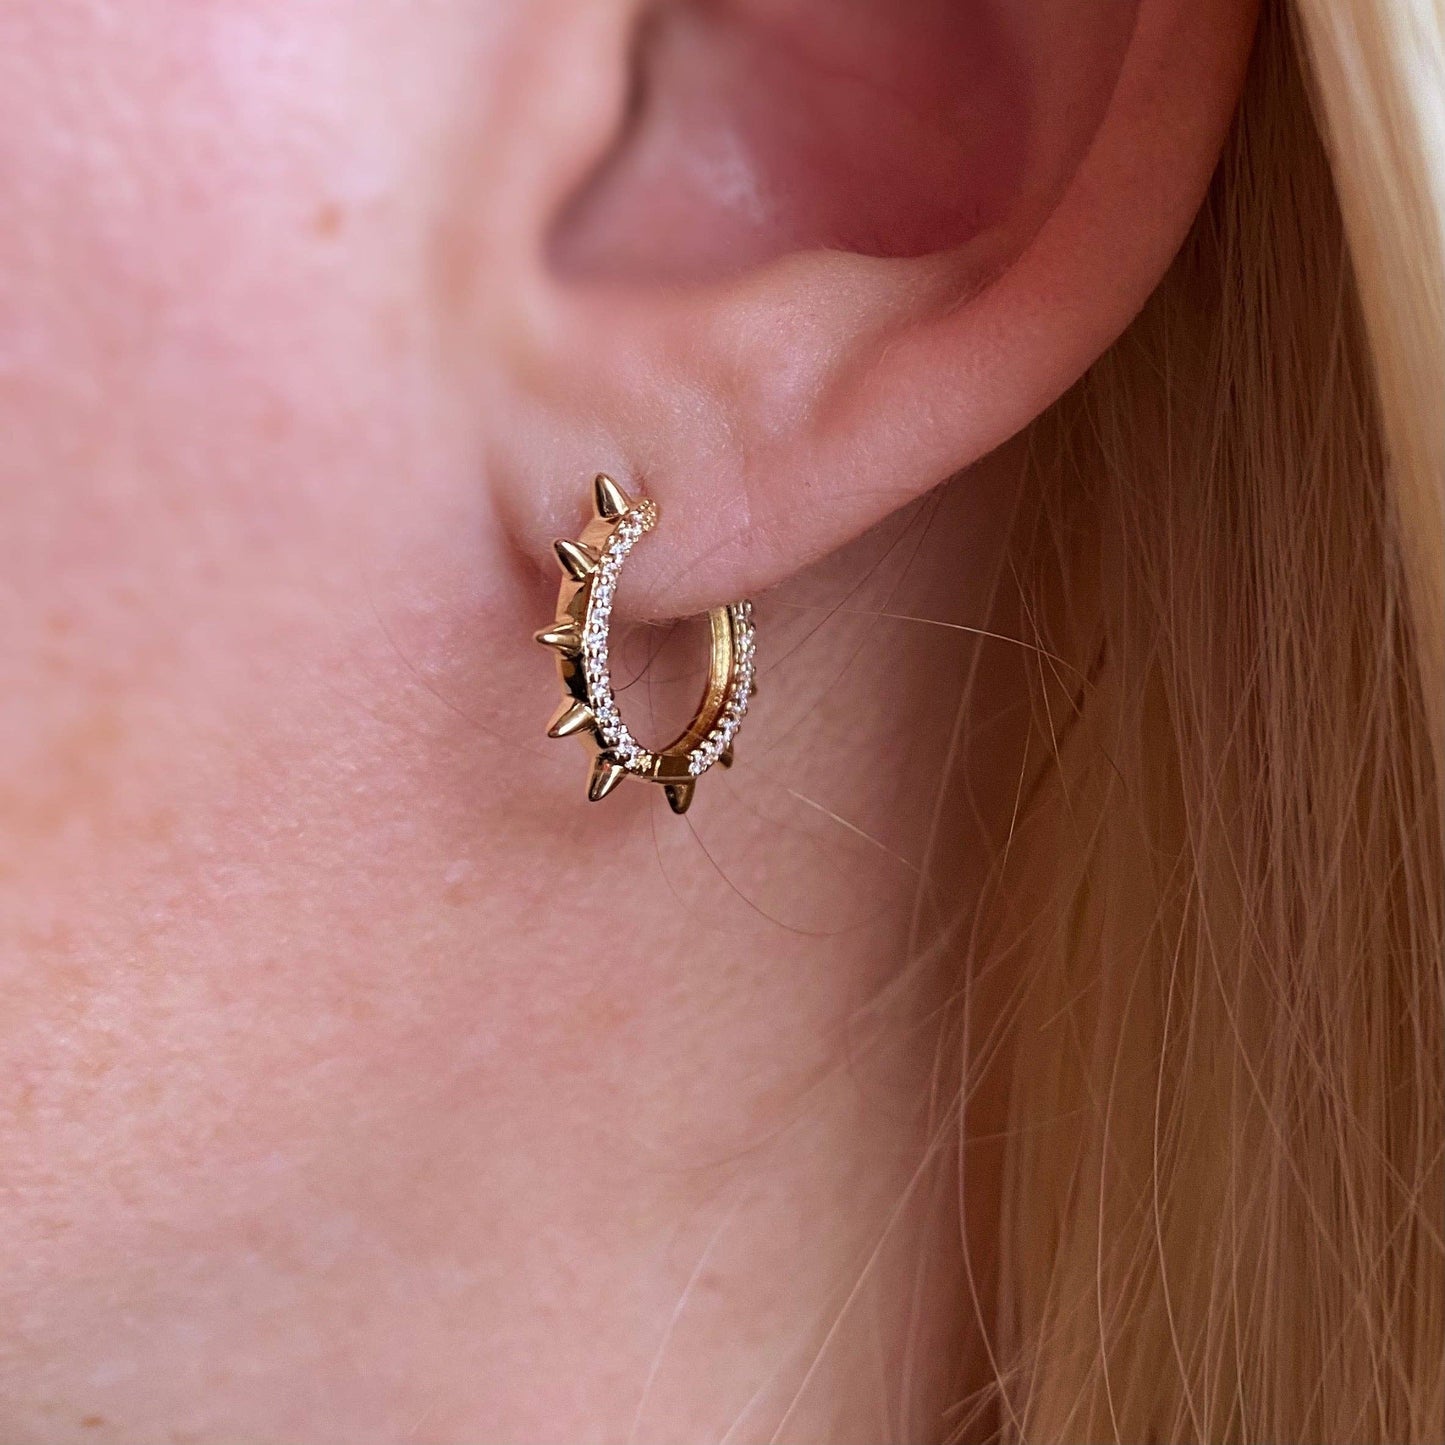 18k Gold Filled Spike Hoop Earrings With Cubic Zirconia Detail